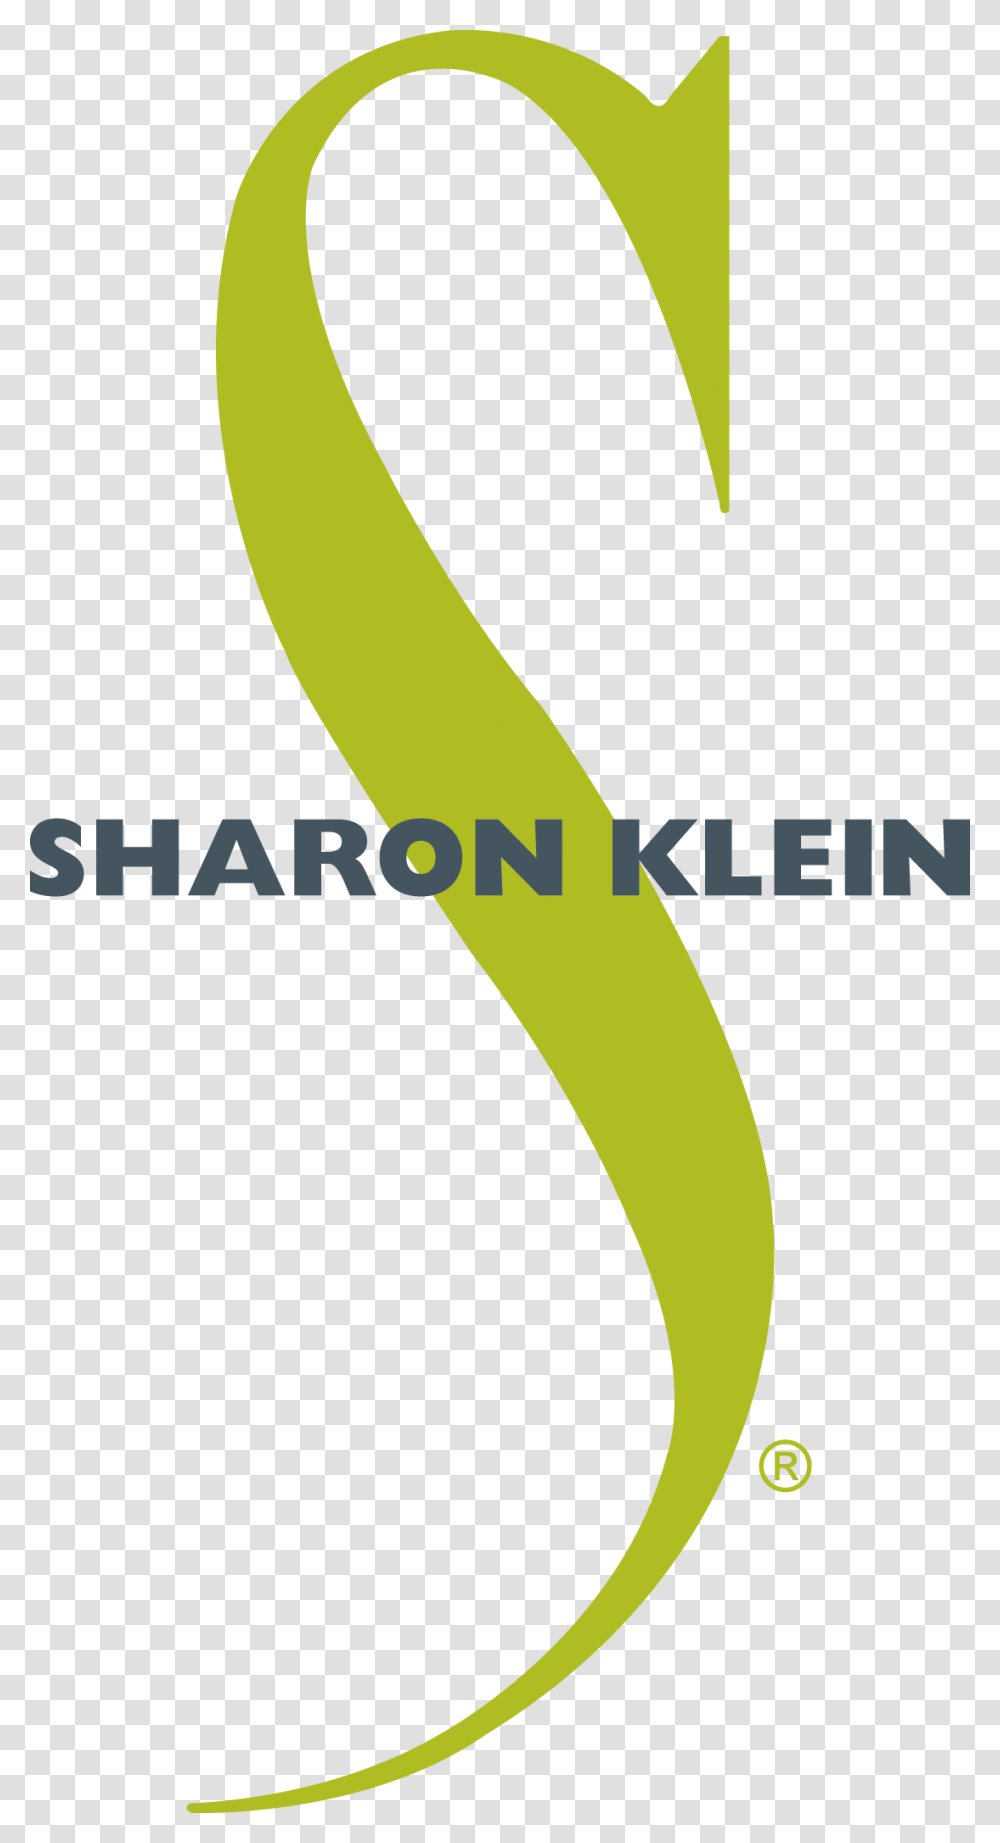 Sharon Klein Graphic Design Graphic Design, Plant, Banana, Fruit, Food Transparent Png